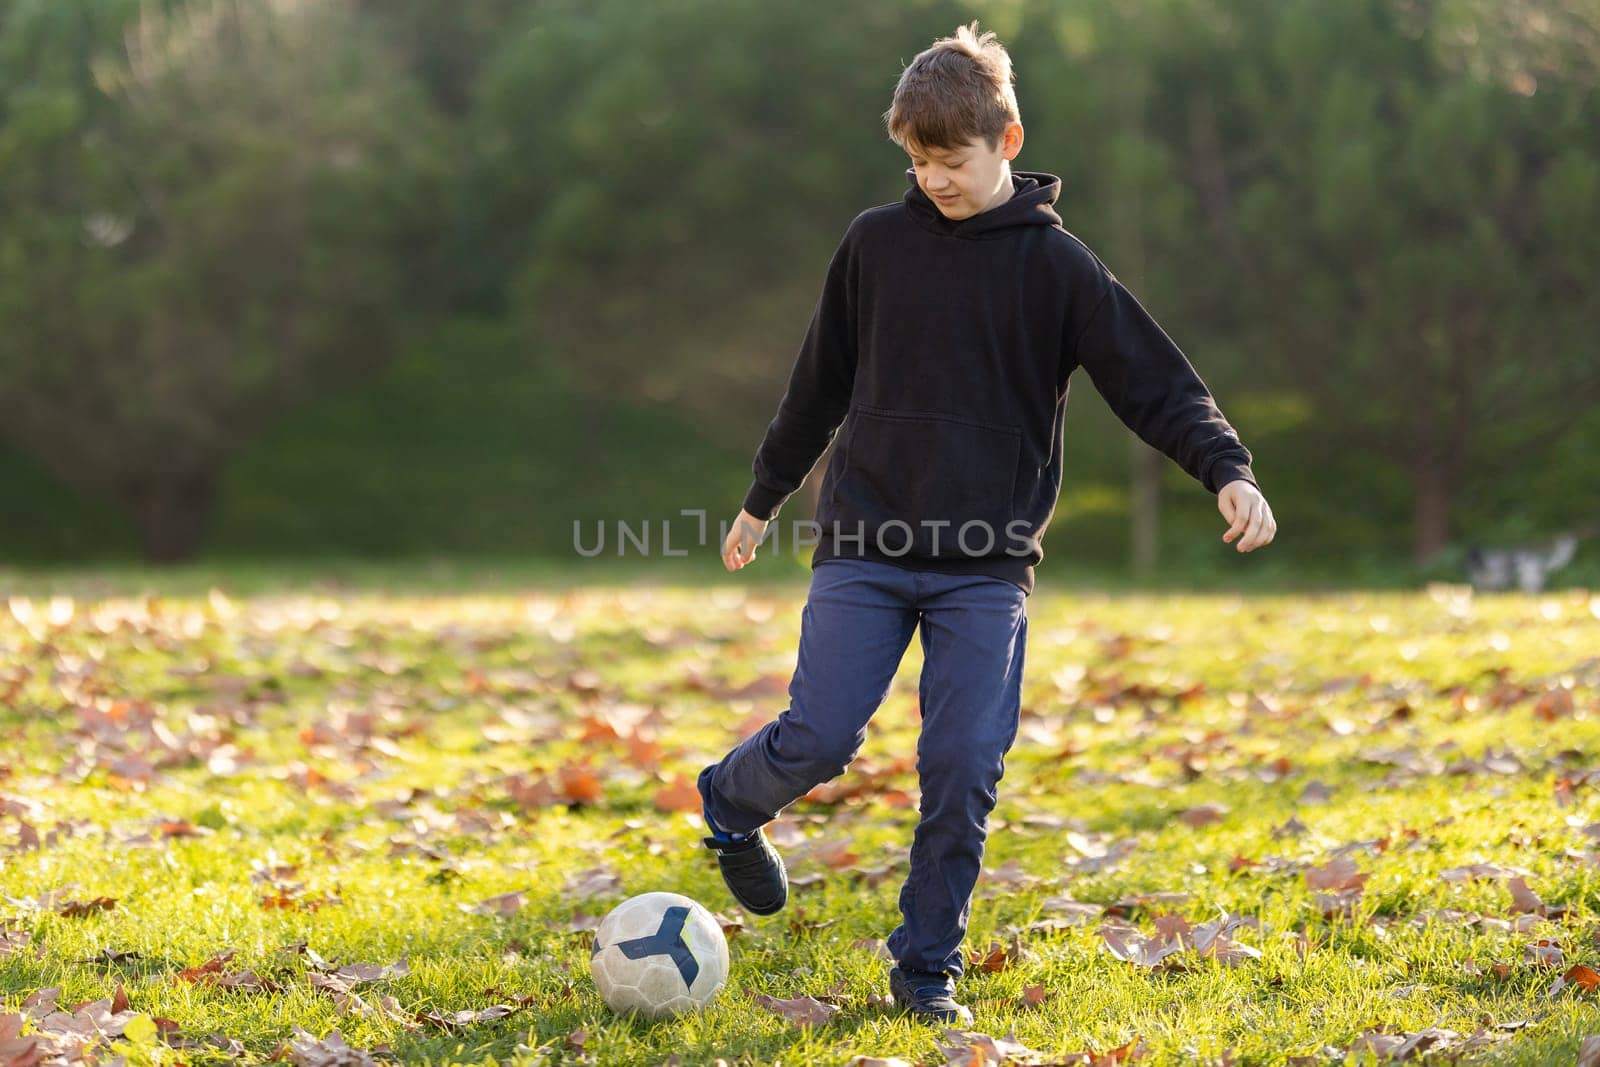 A boy kicks a soccer ball in a park by Studia72